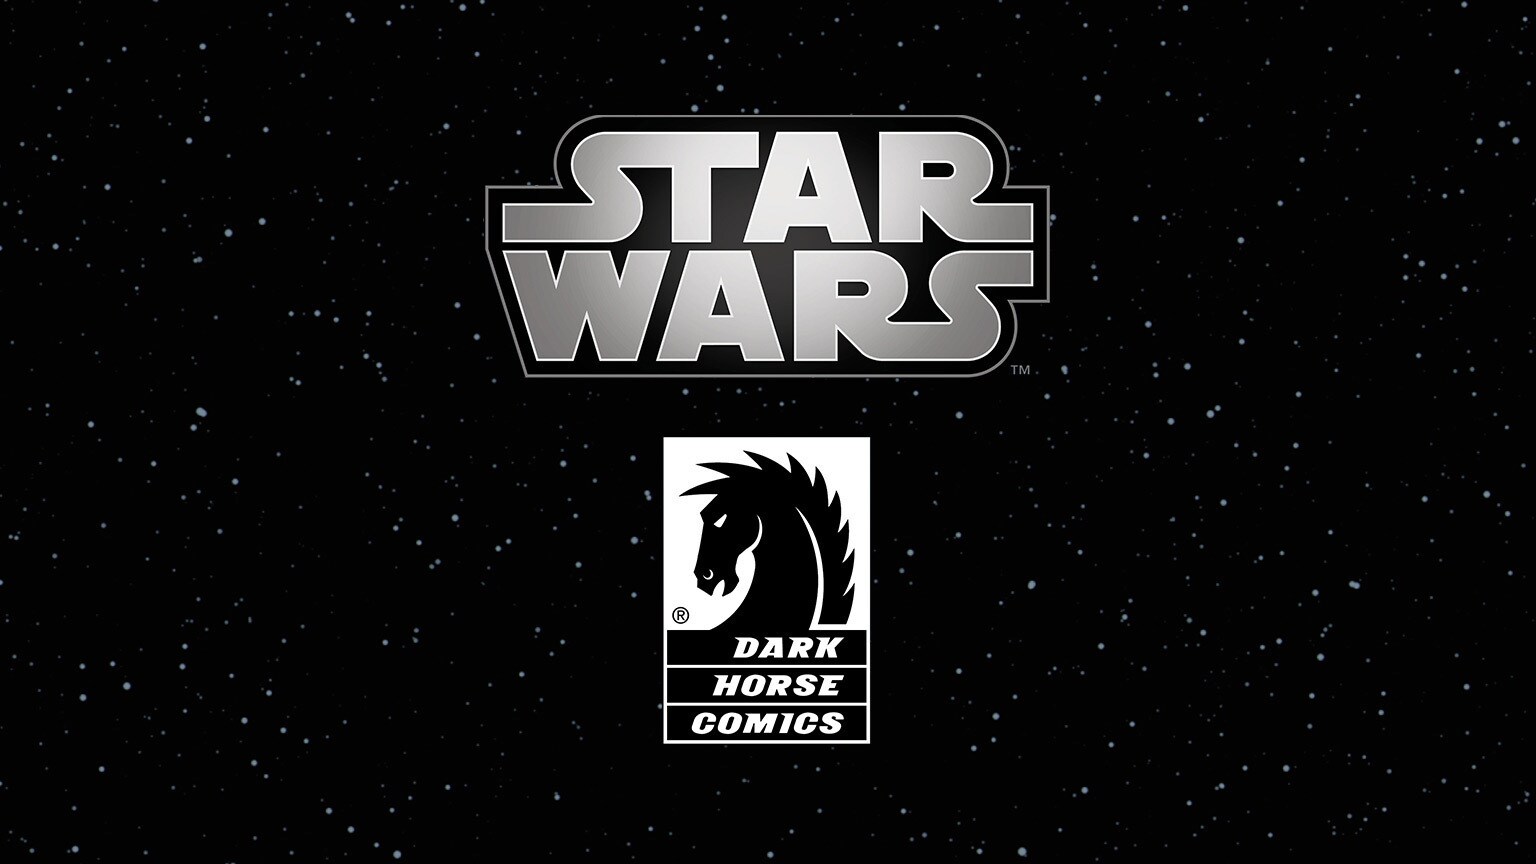 Dark Horse Comics Returns to the Star Wars Galaxy